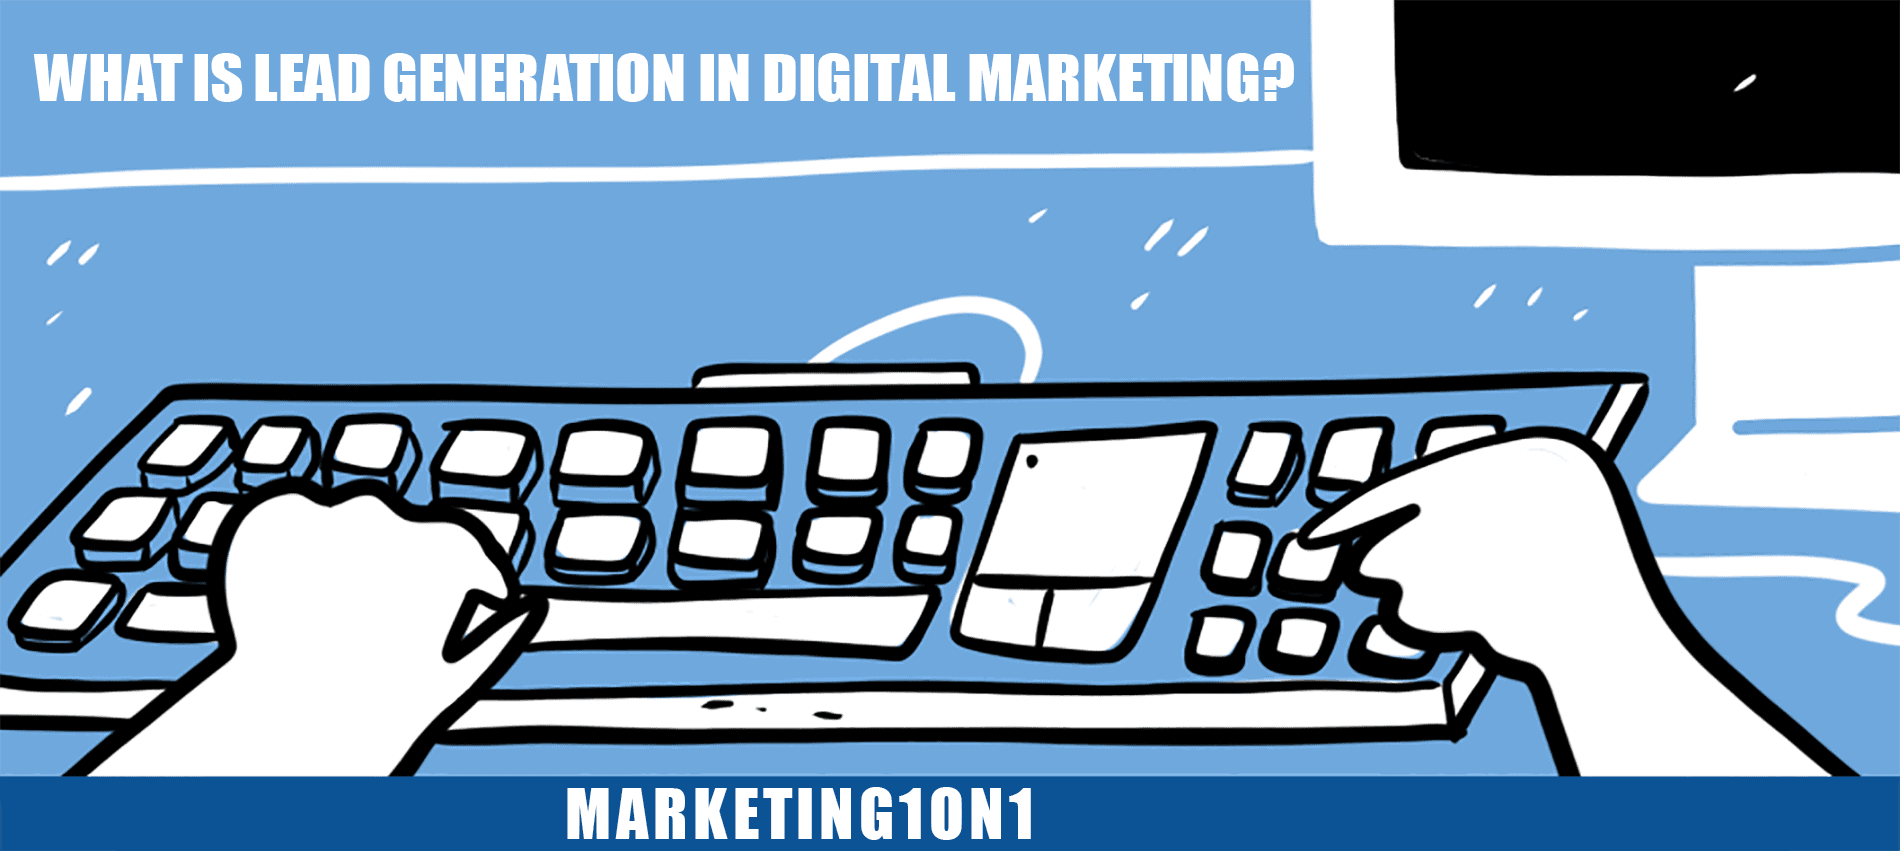 What is lead generation in digital marketing?